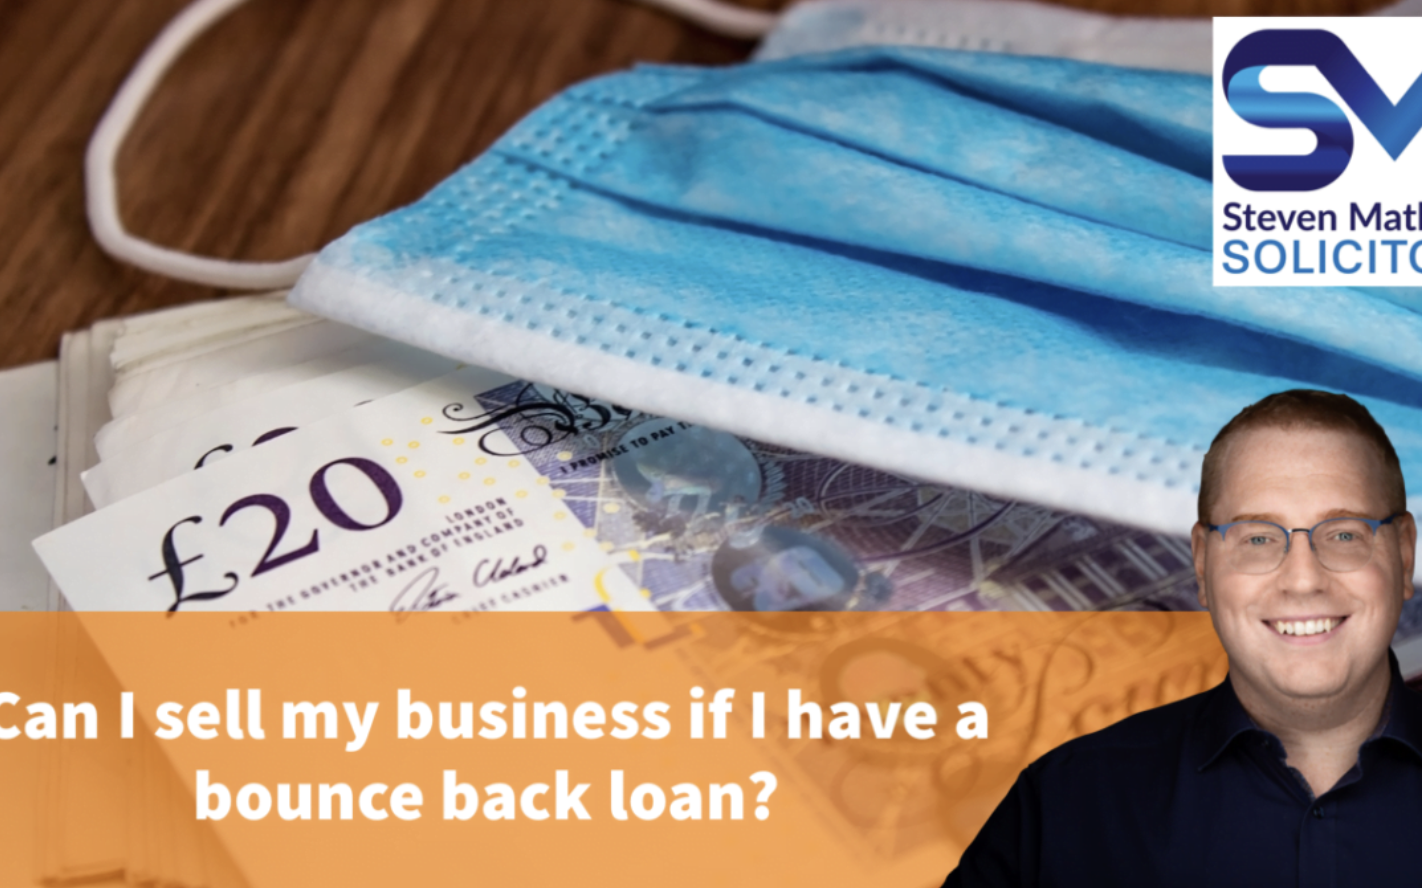 steven mather business lawyer blog article describing concept of a bounce back business loan